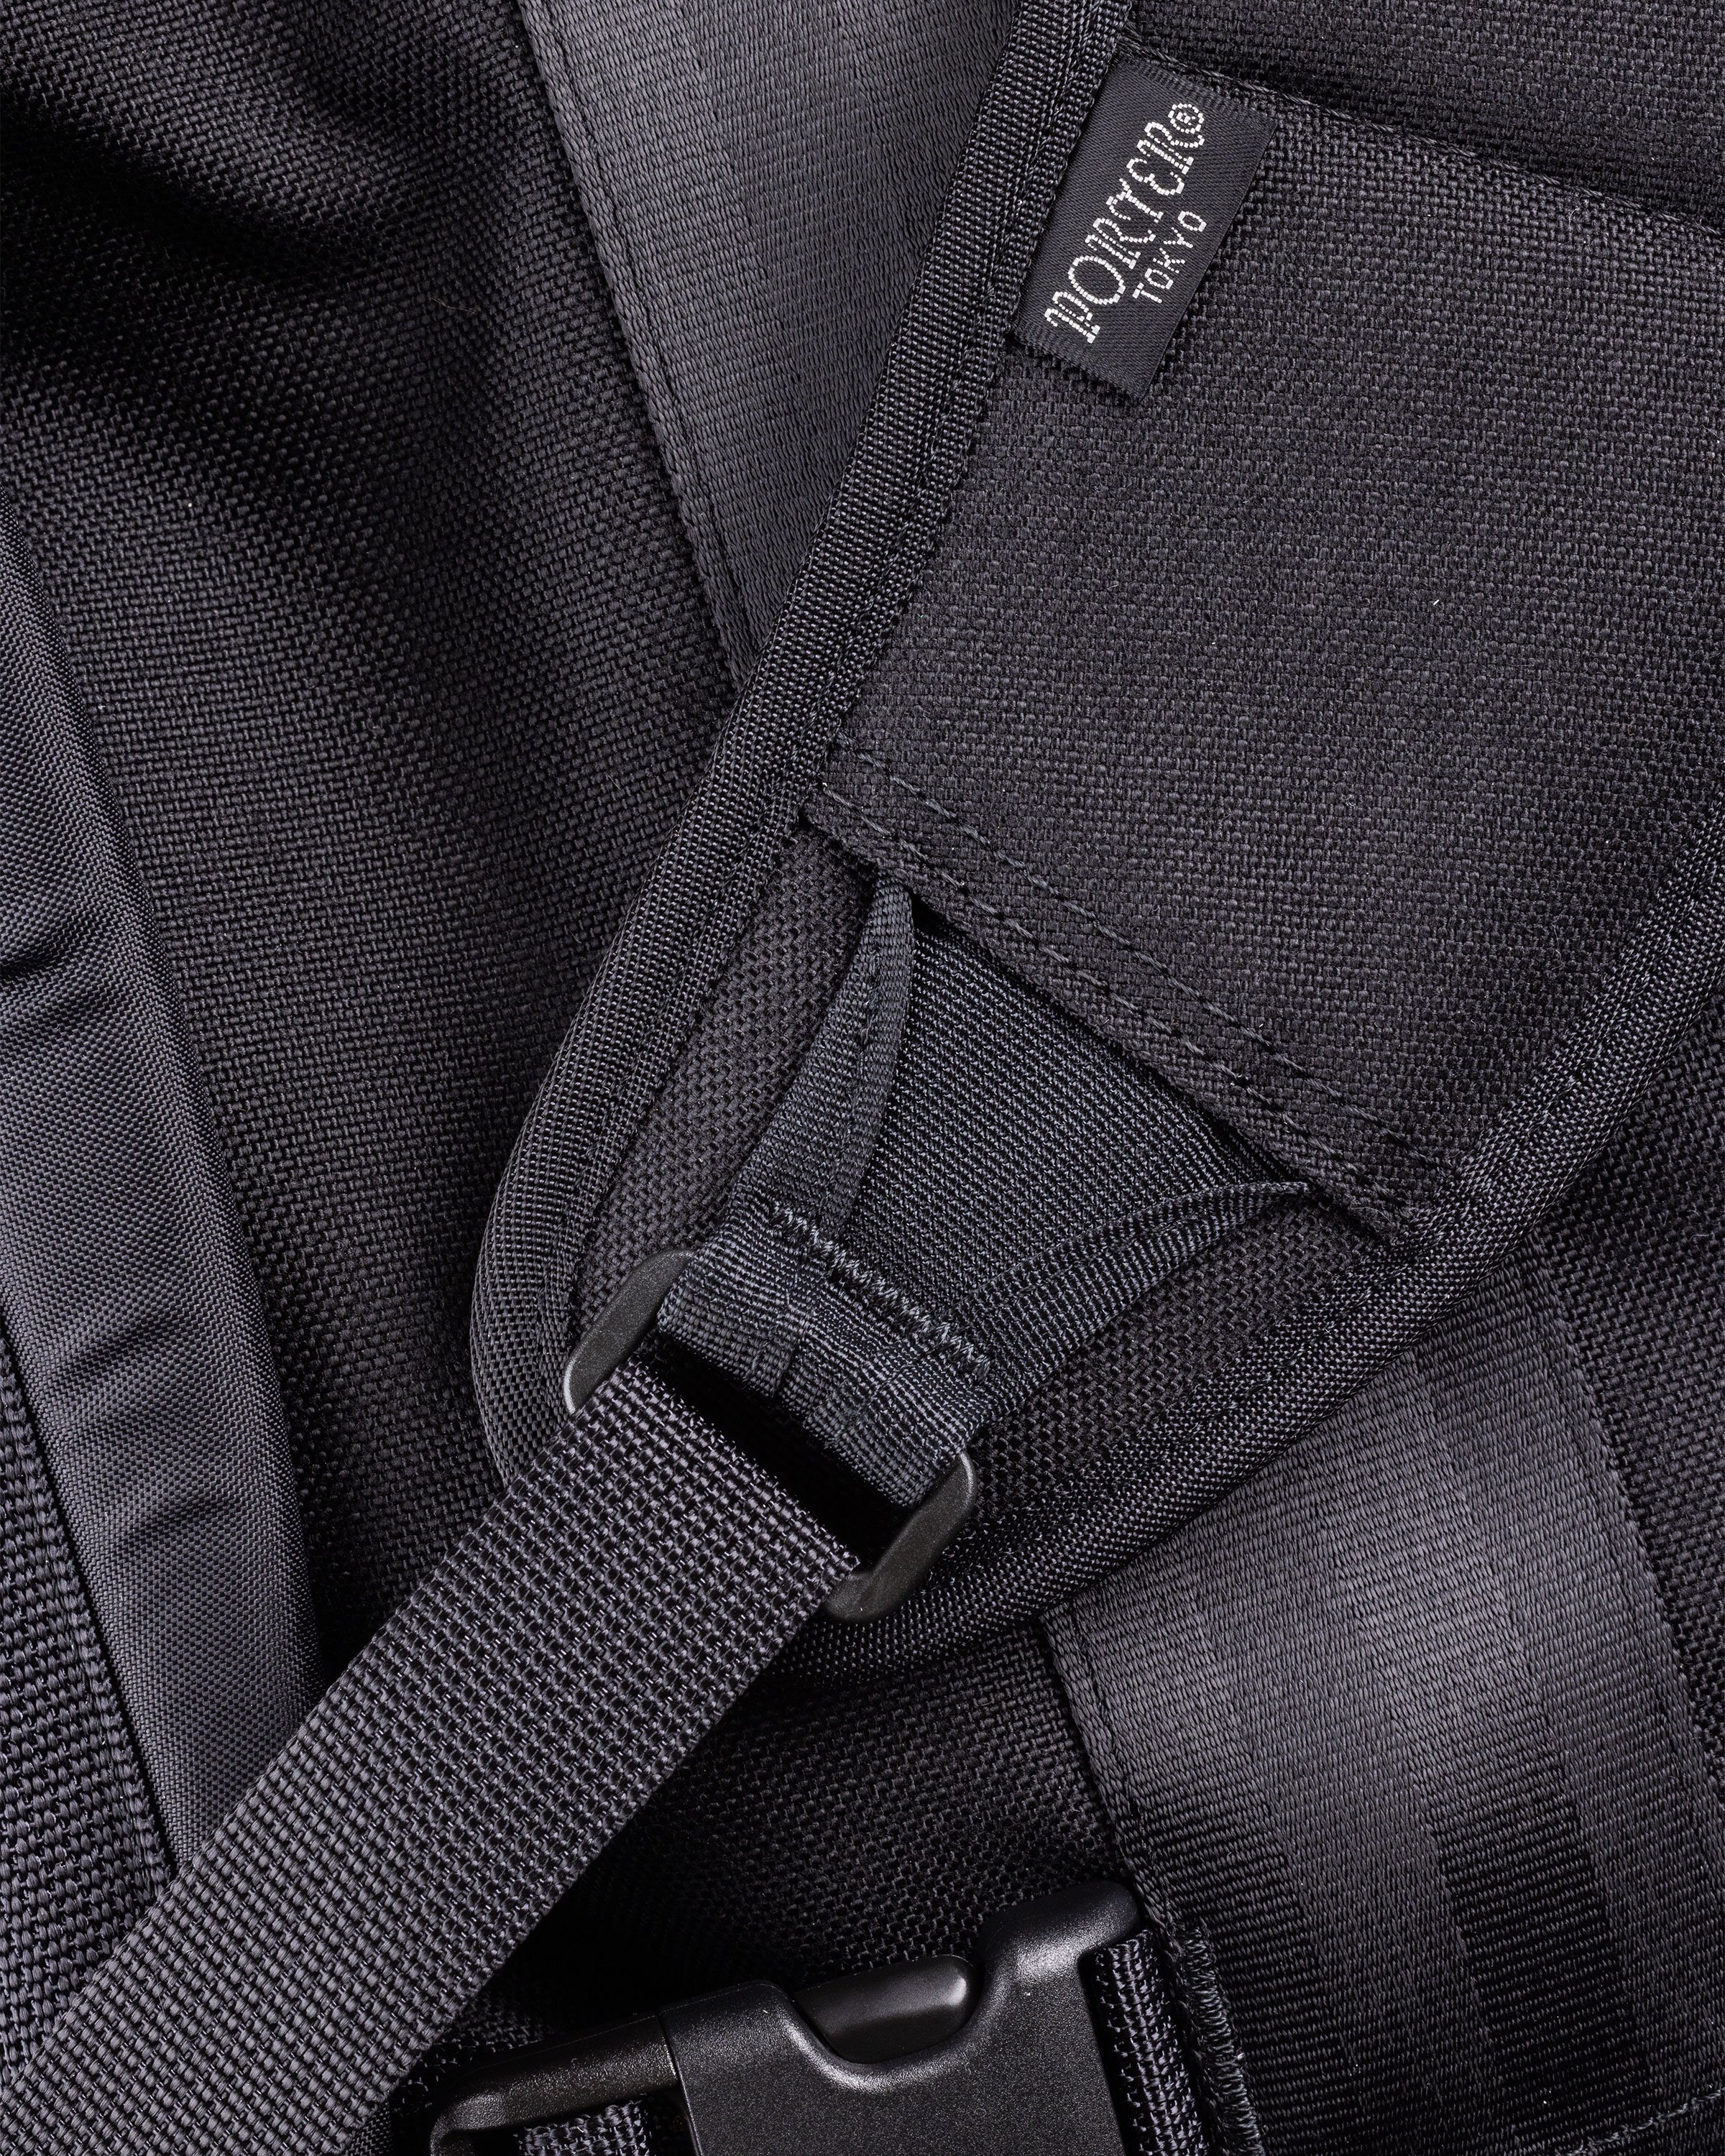 Porter-Yoshida & Co. - Booth Pack 3-Way Duffle Bag Black - Accessories - Black - Image 3